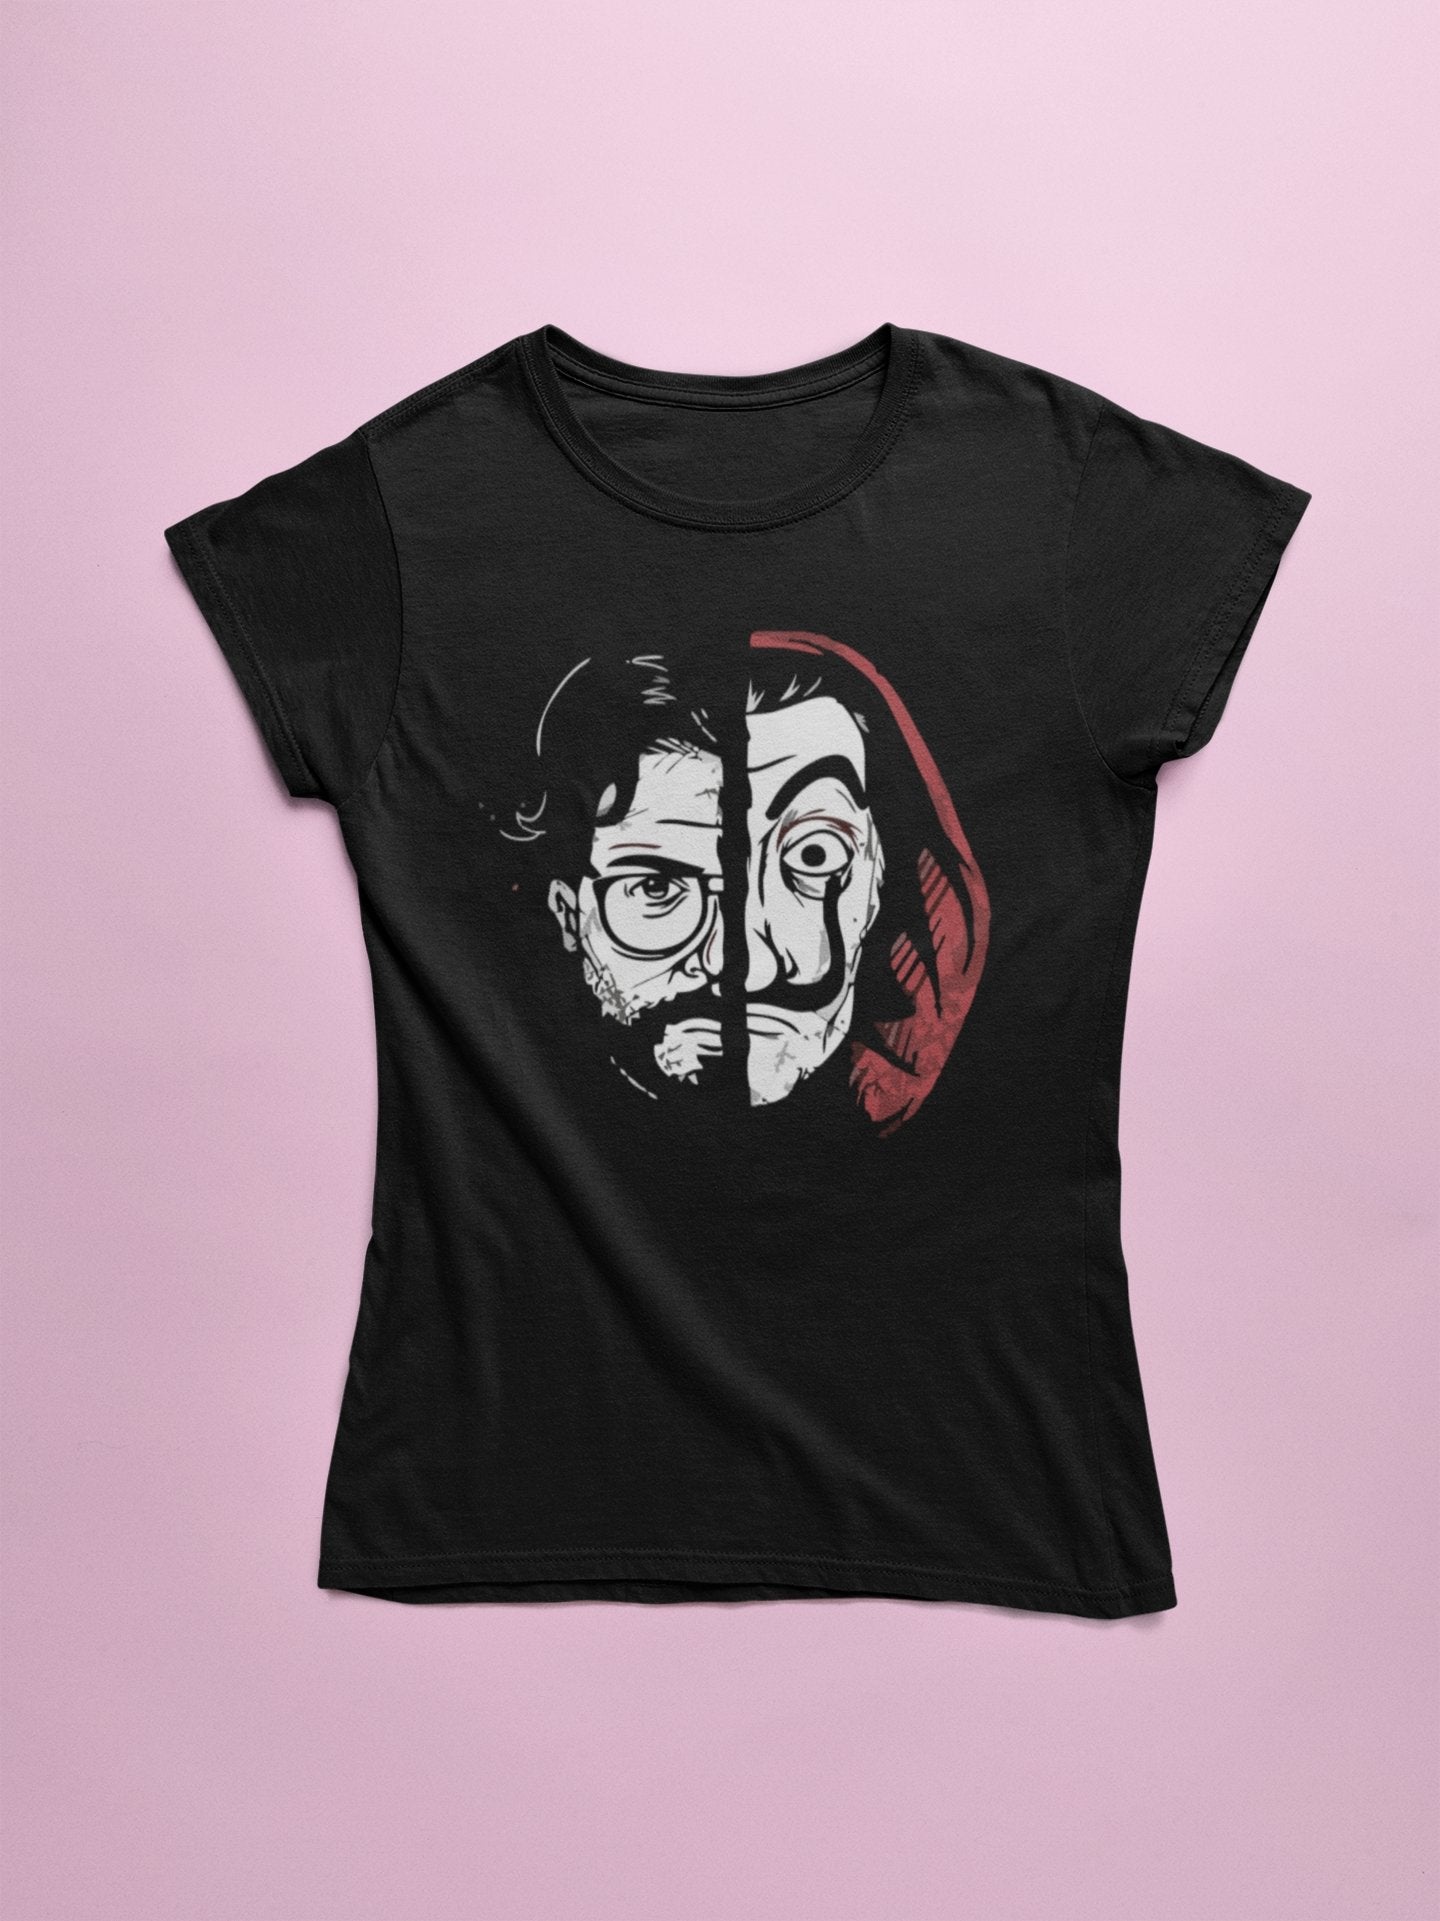 Professor two face Money heist Graphic T Shirt for Women - Insane Tees